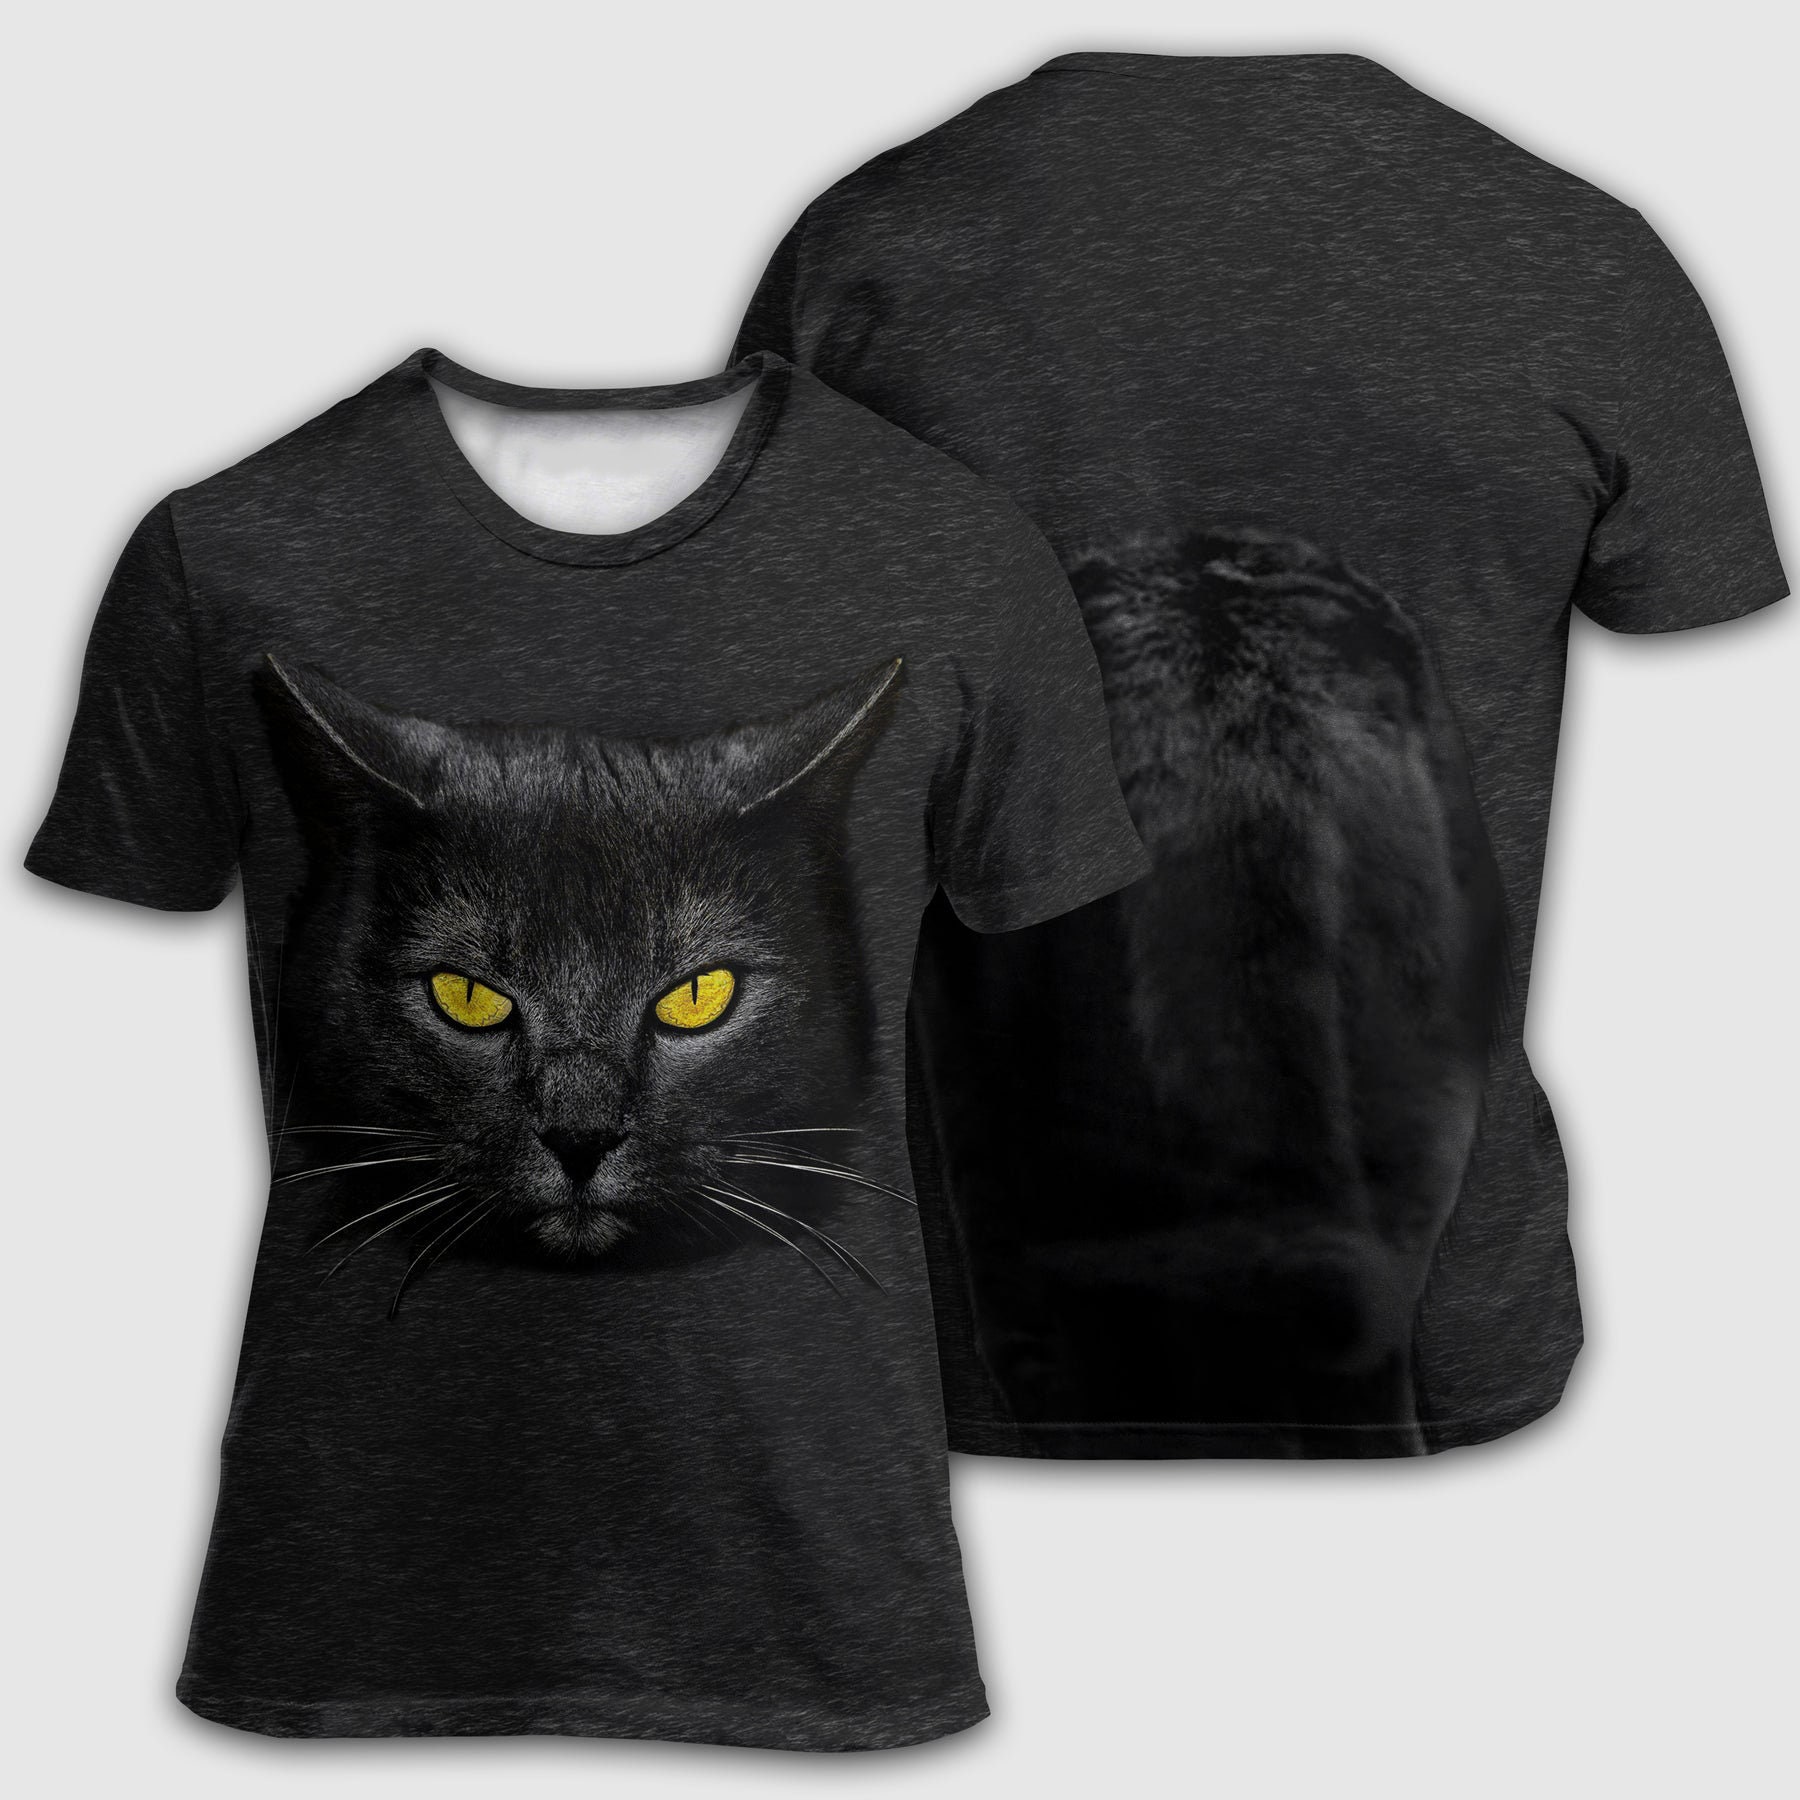 Unisex Cat Loves Darkness Hoodie, Black Cat Hoodie, Black Cat Shirt, Cat Lover Shirt, Animal